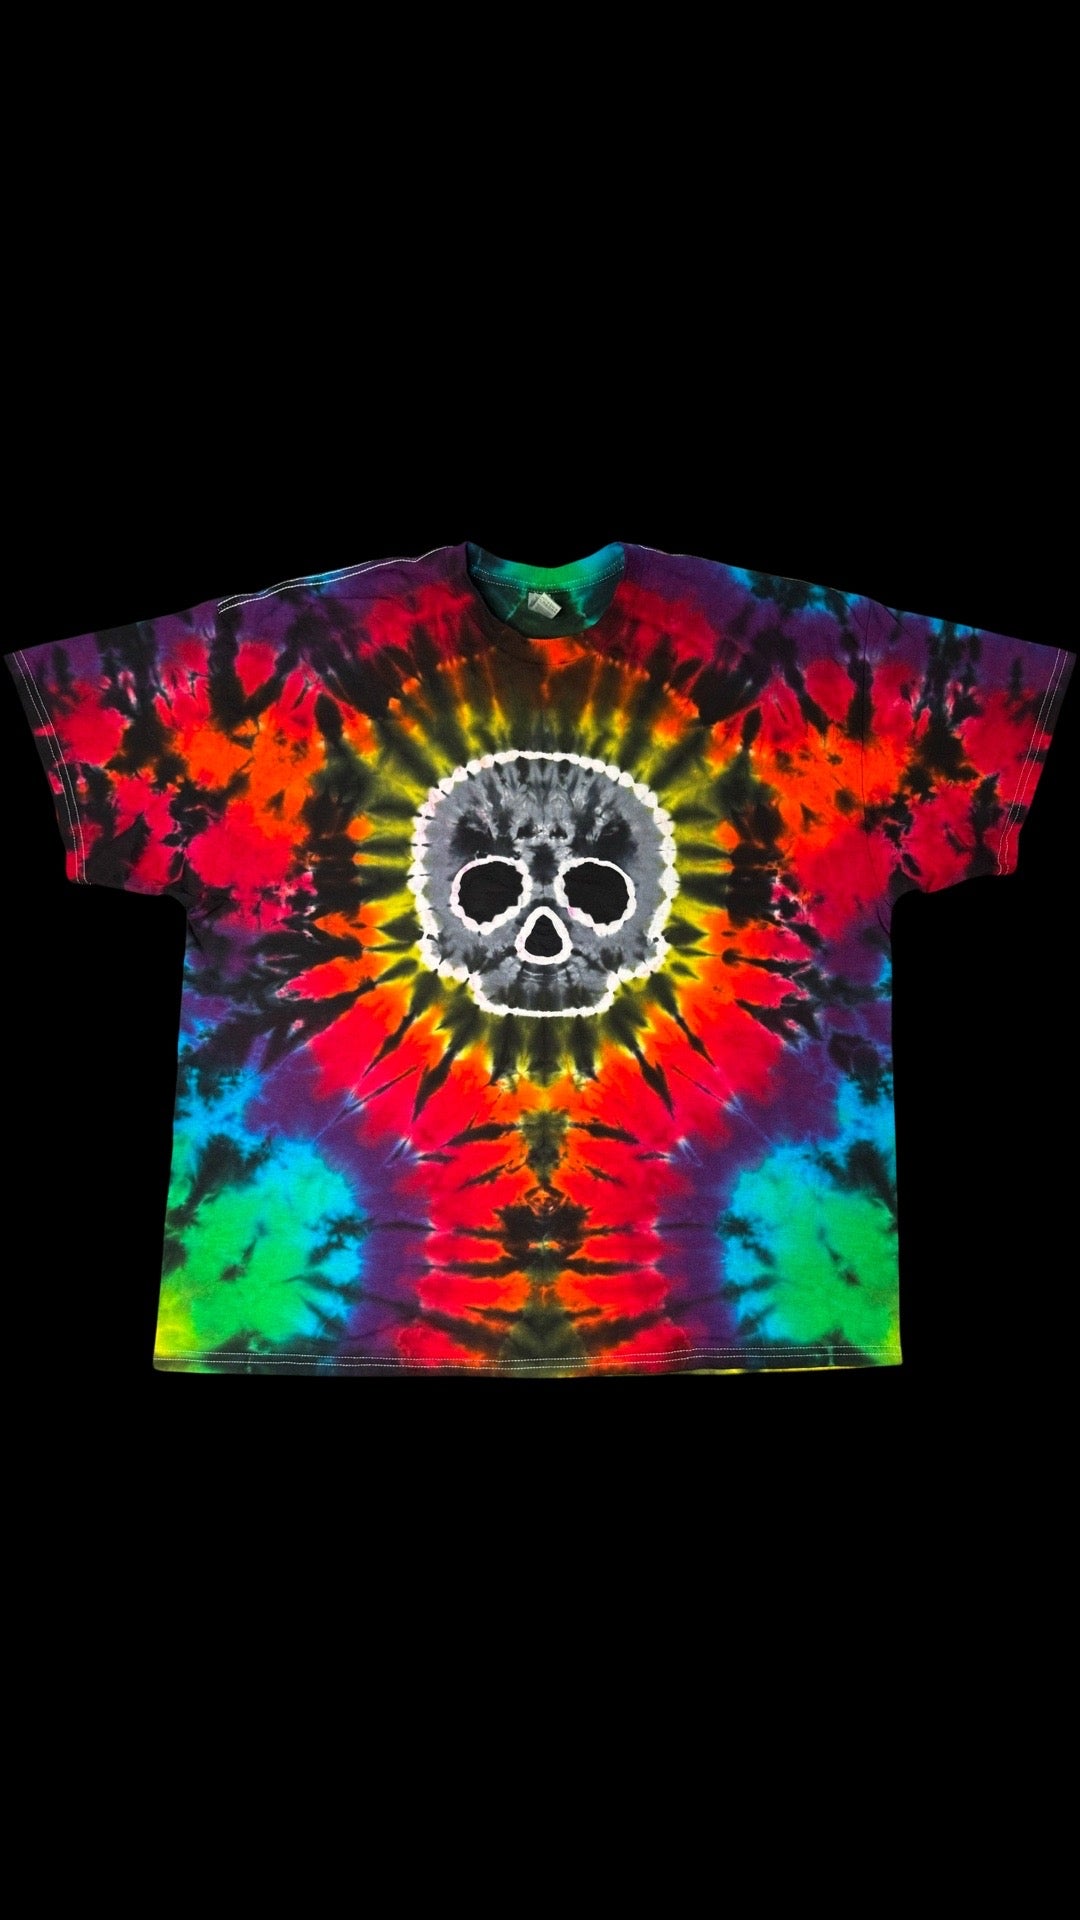 Rainbow Skull Tie Dye Tee Shirt